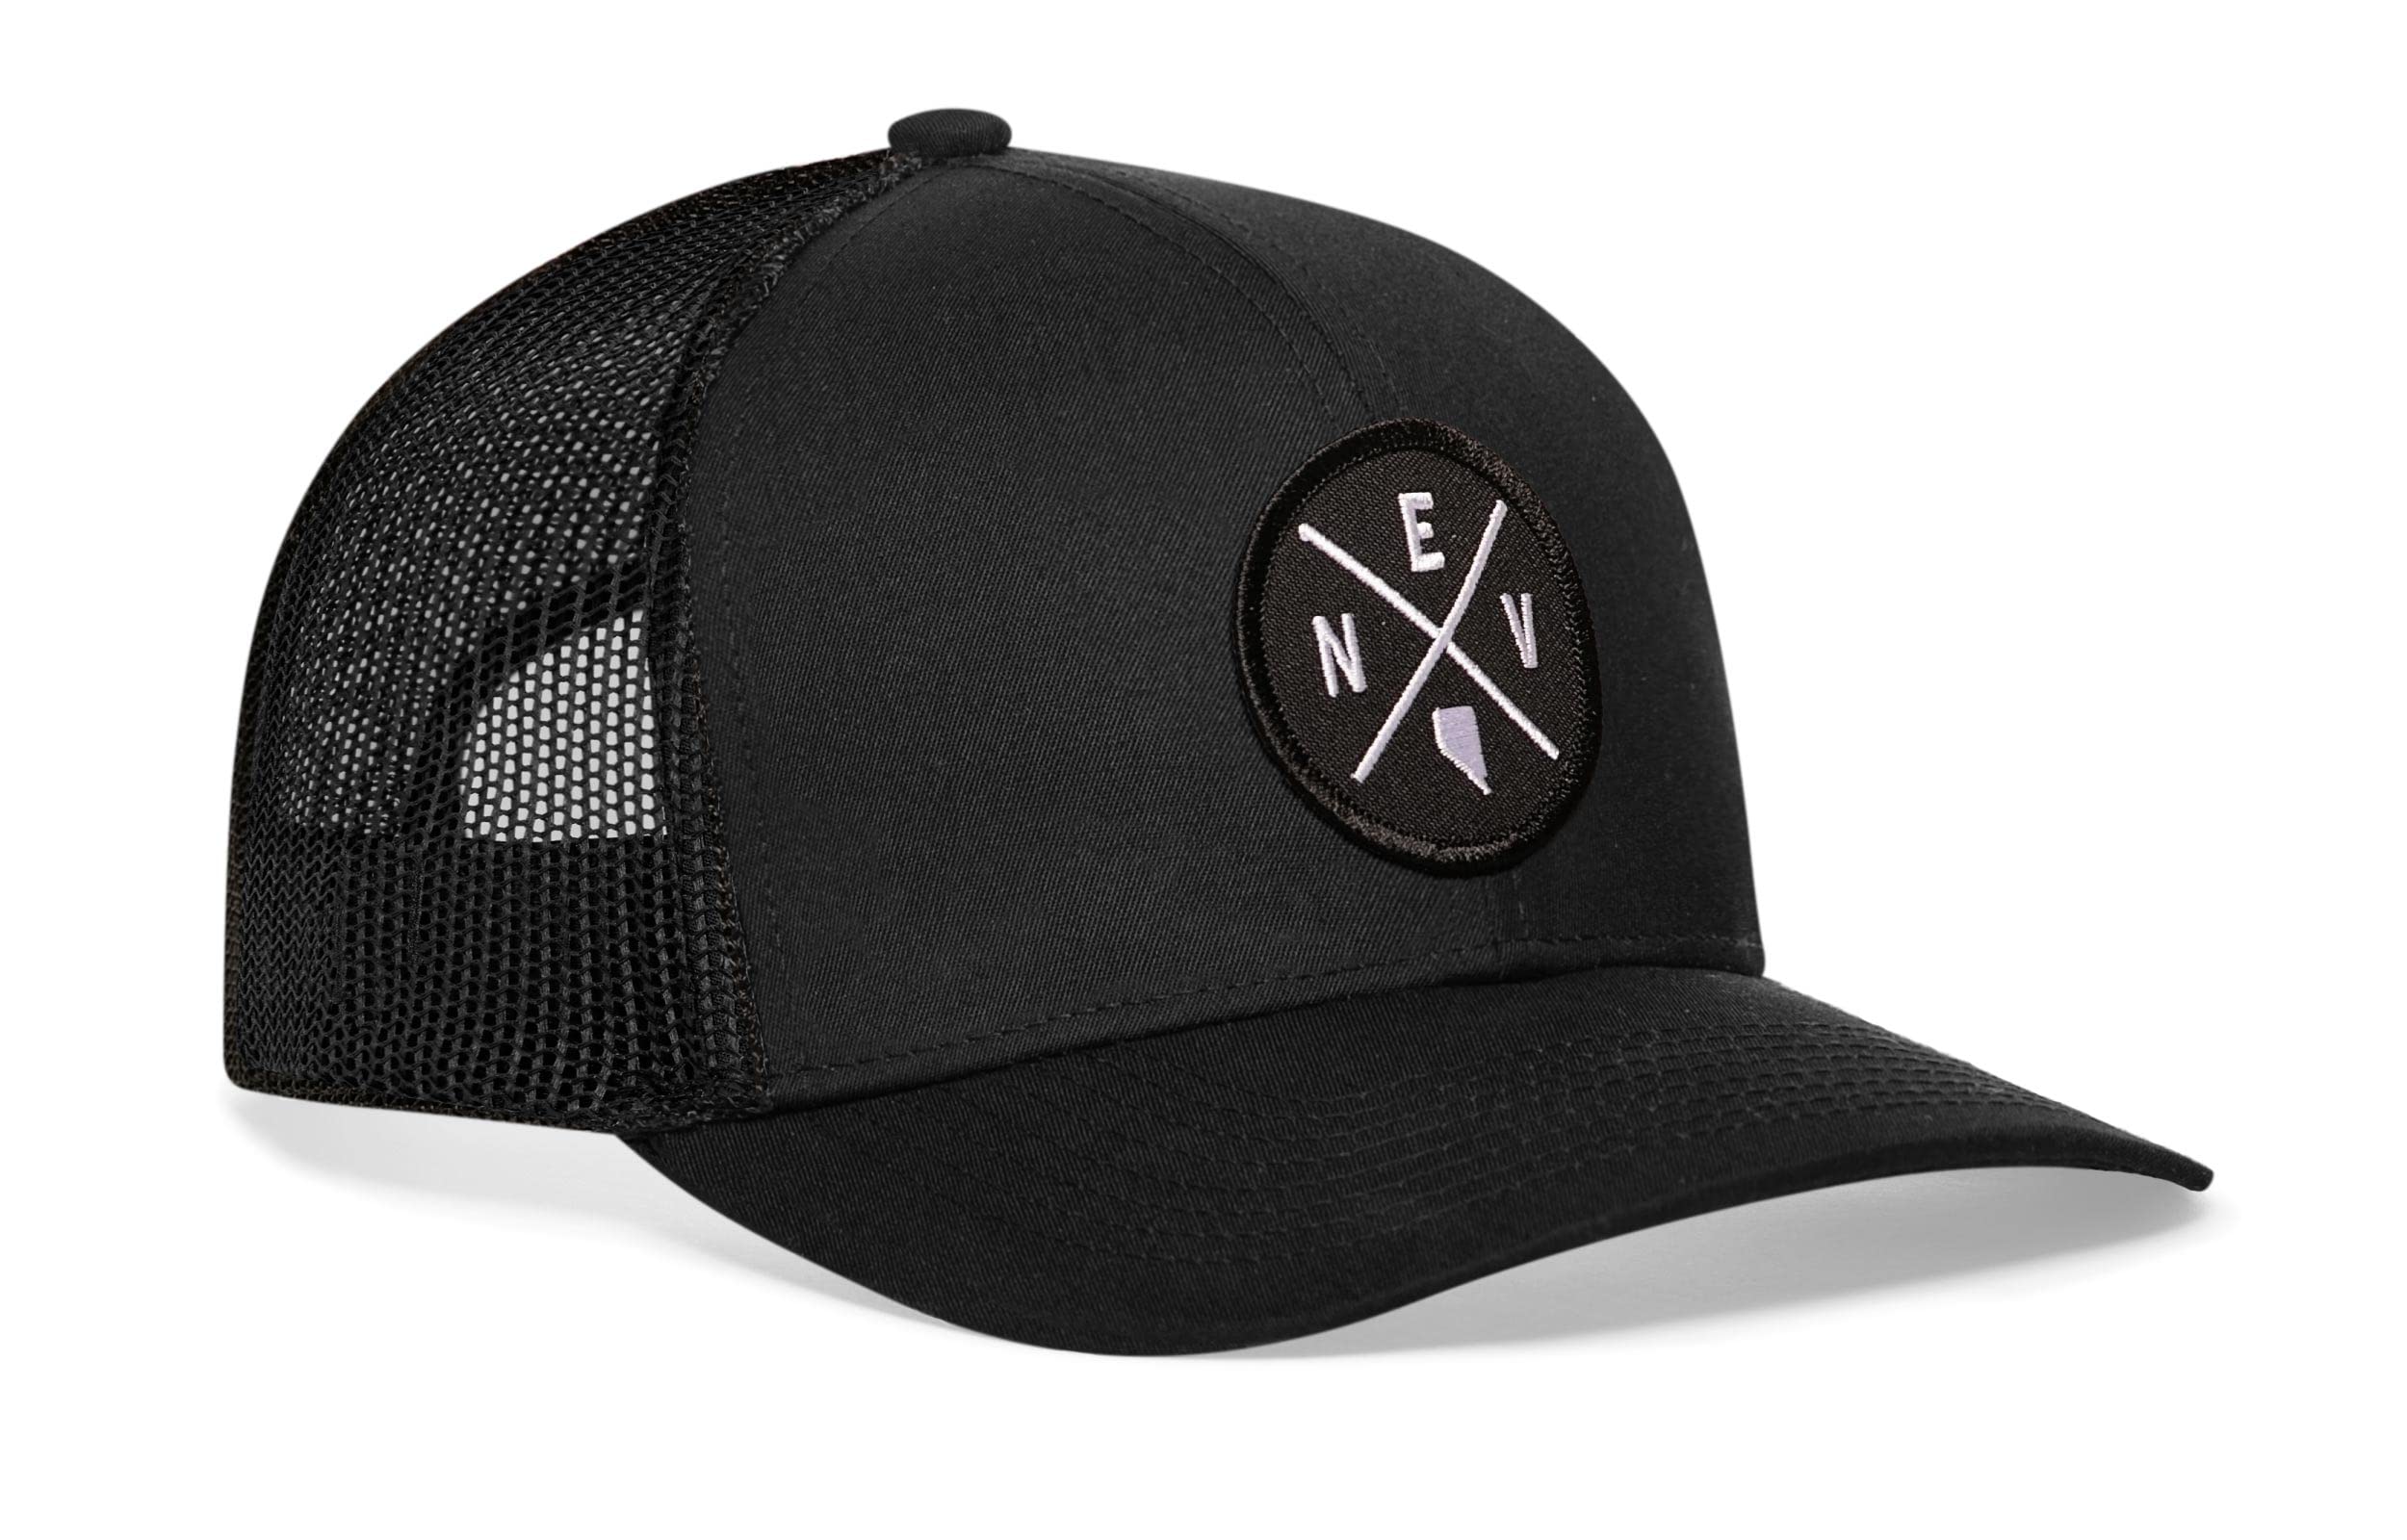 HAKA NEV Hat, Nevada State Trucker Hat, Mesh Outdoor Hat for Men & Women, Adjustable Snapback Baseball Cap, Golf Hat Black